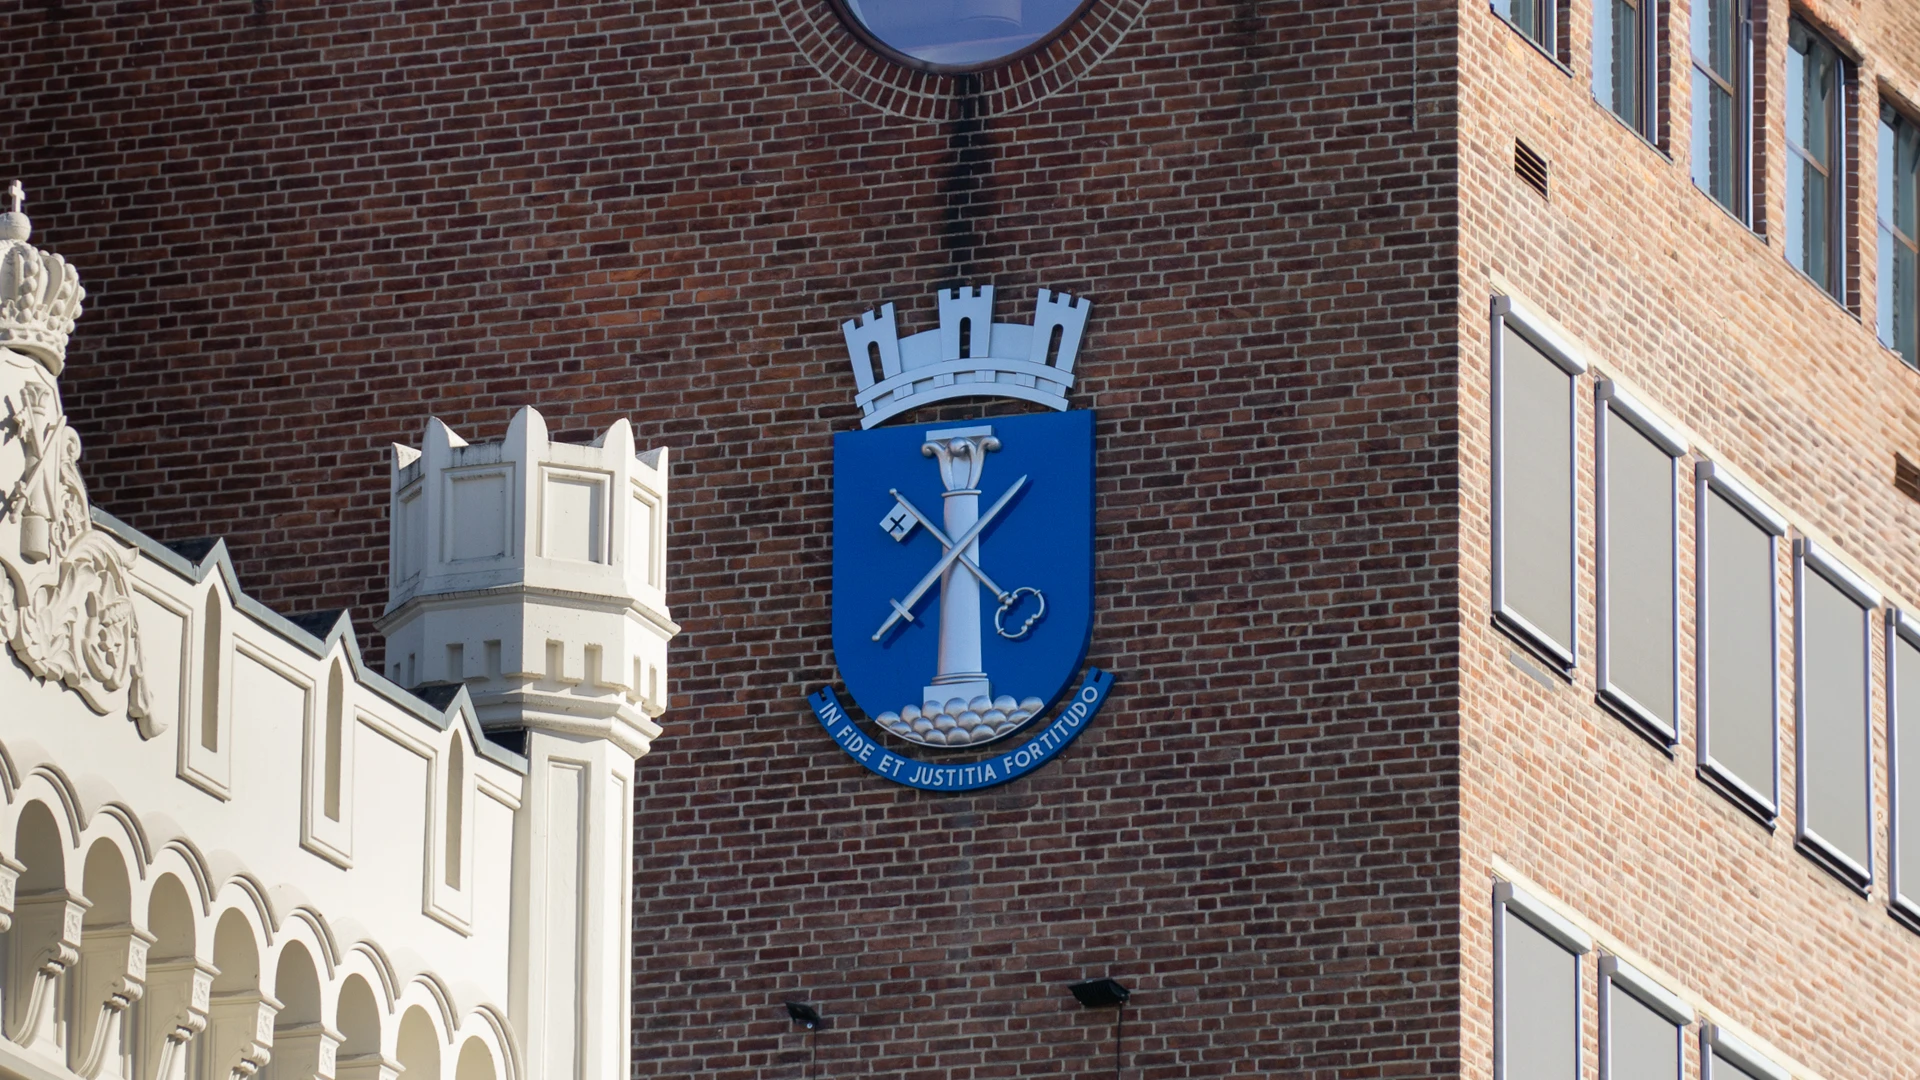 Drammen Kommune rådhus fasadekilt